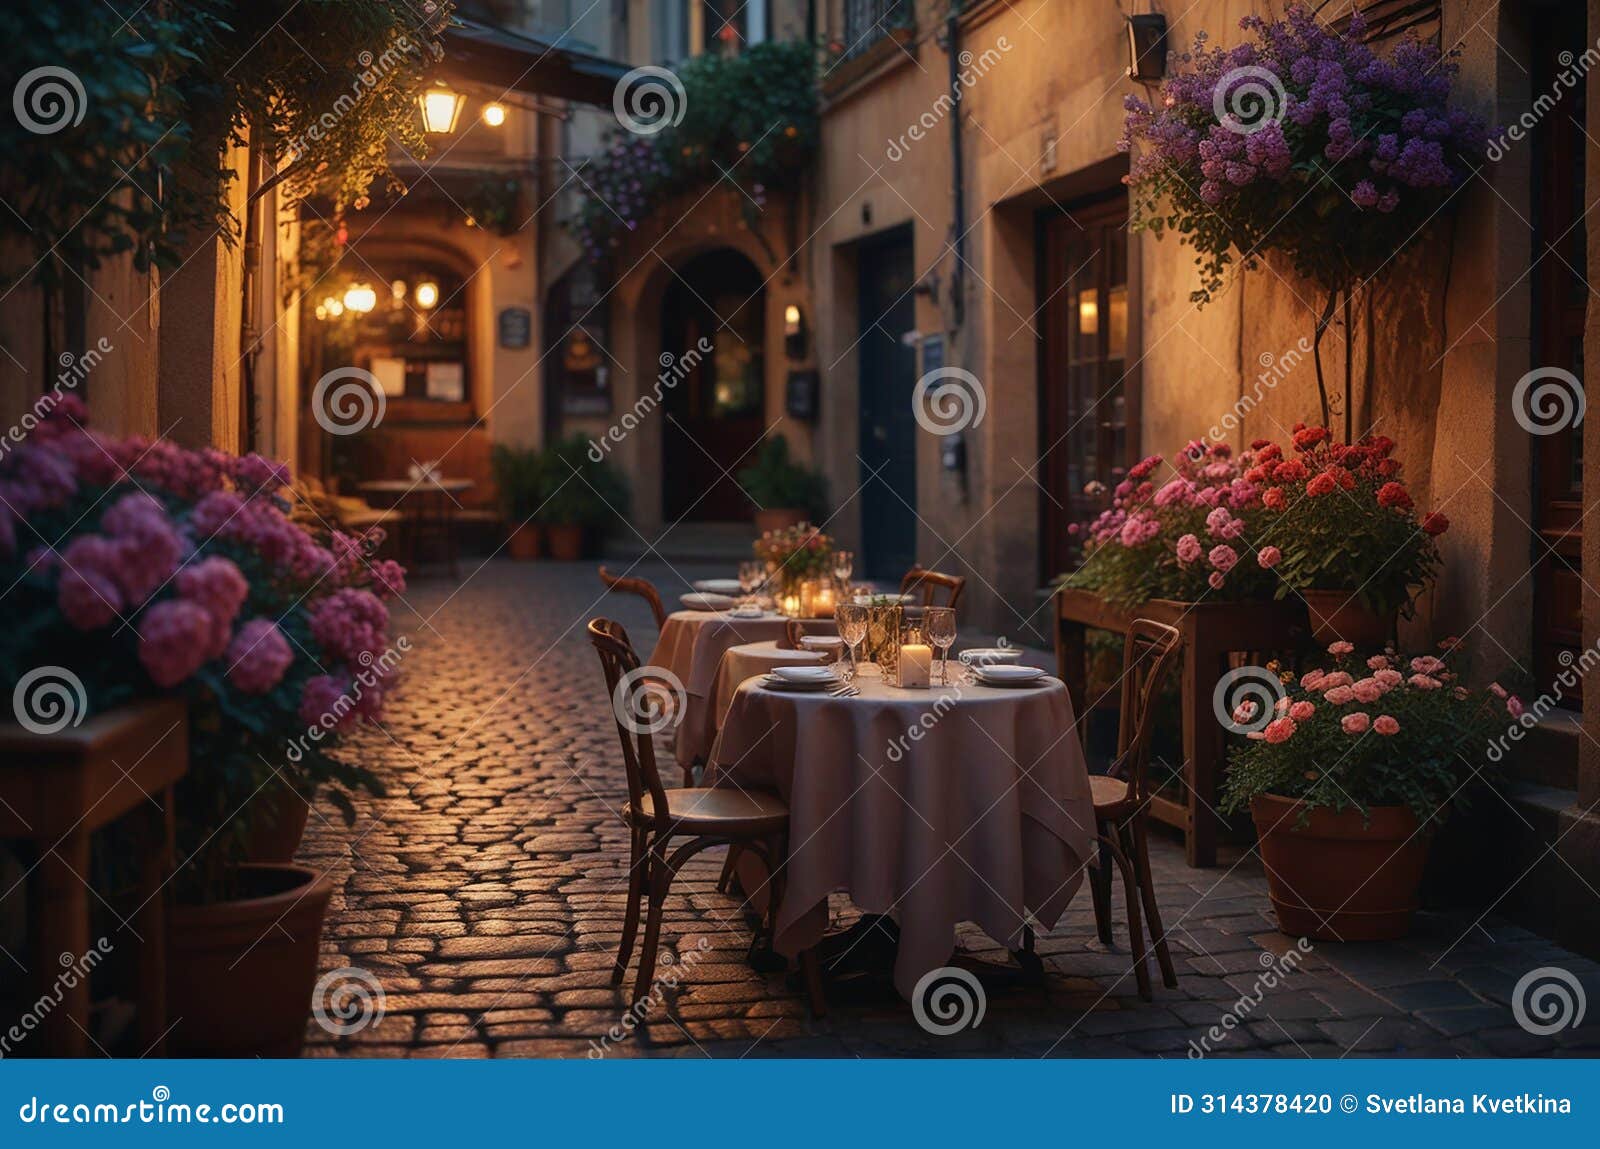 coffee shop, bossa nova style, cute tables outside, cobblestone road, flowers